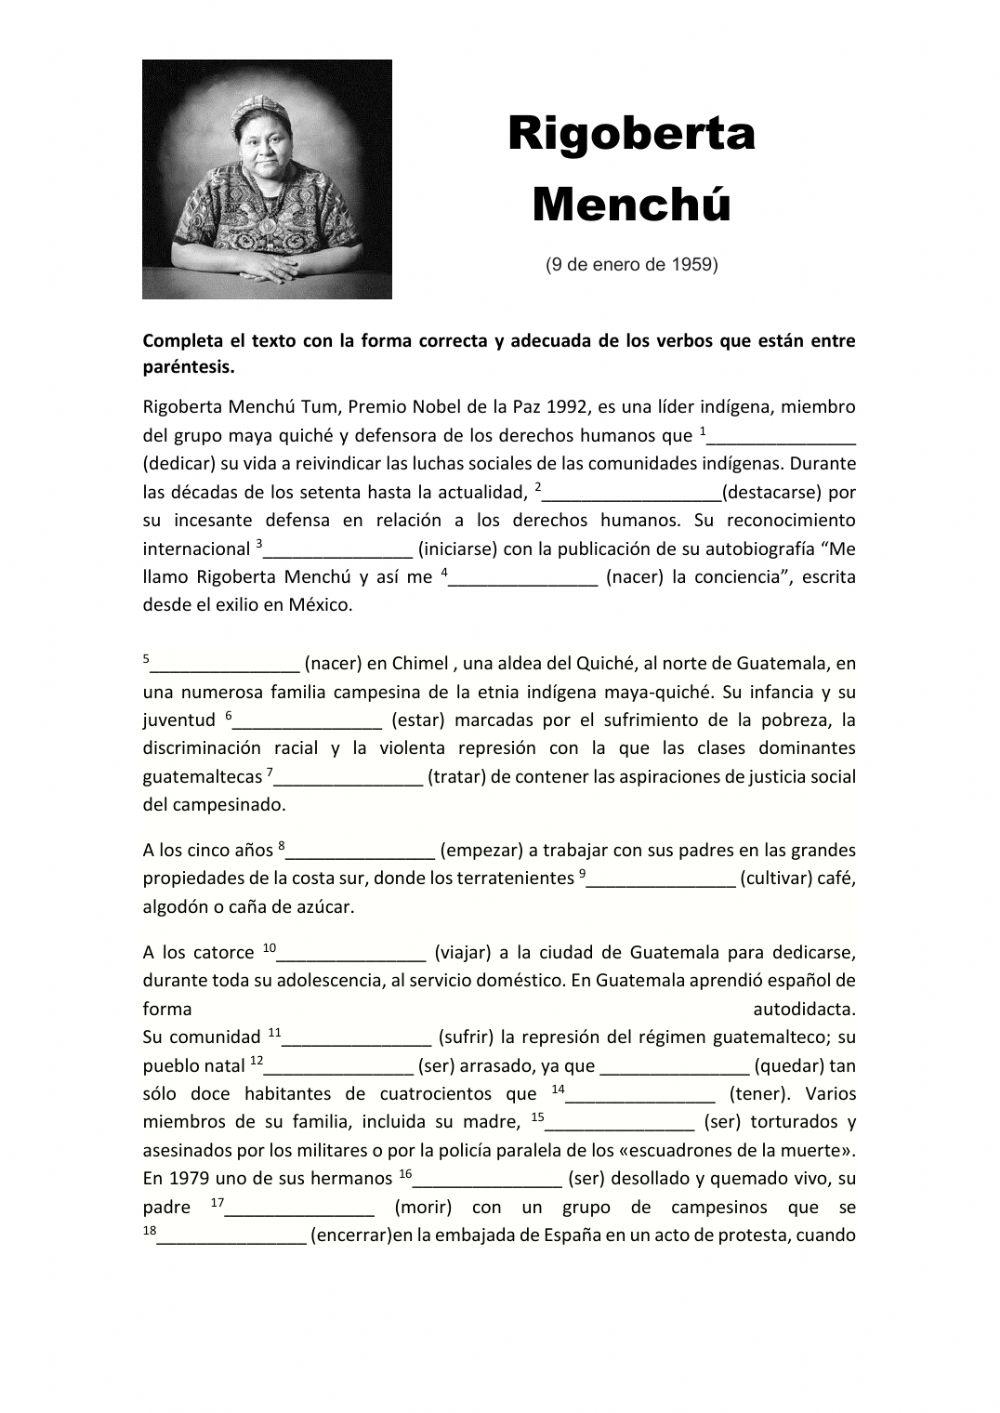 Rigoberta Menchú (biografía)